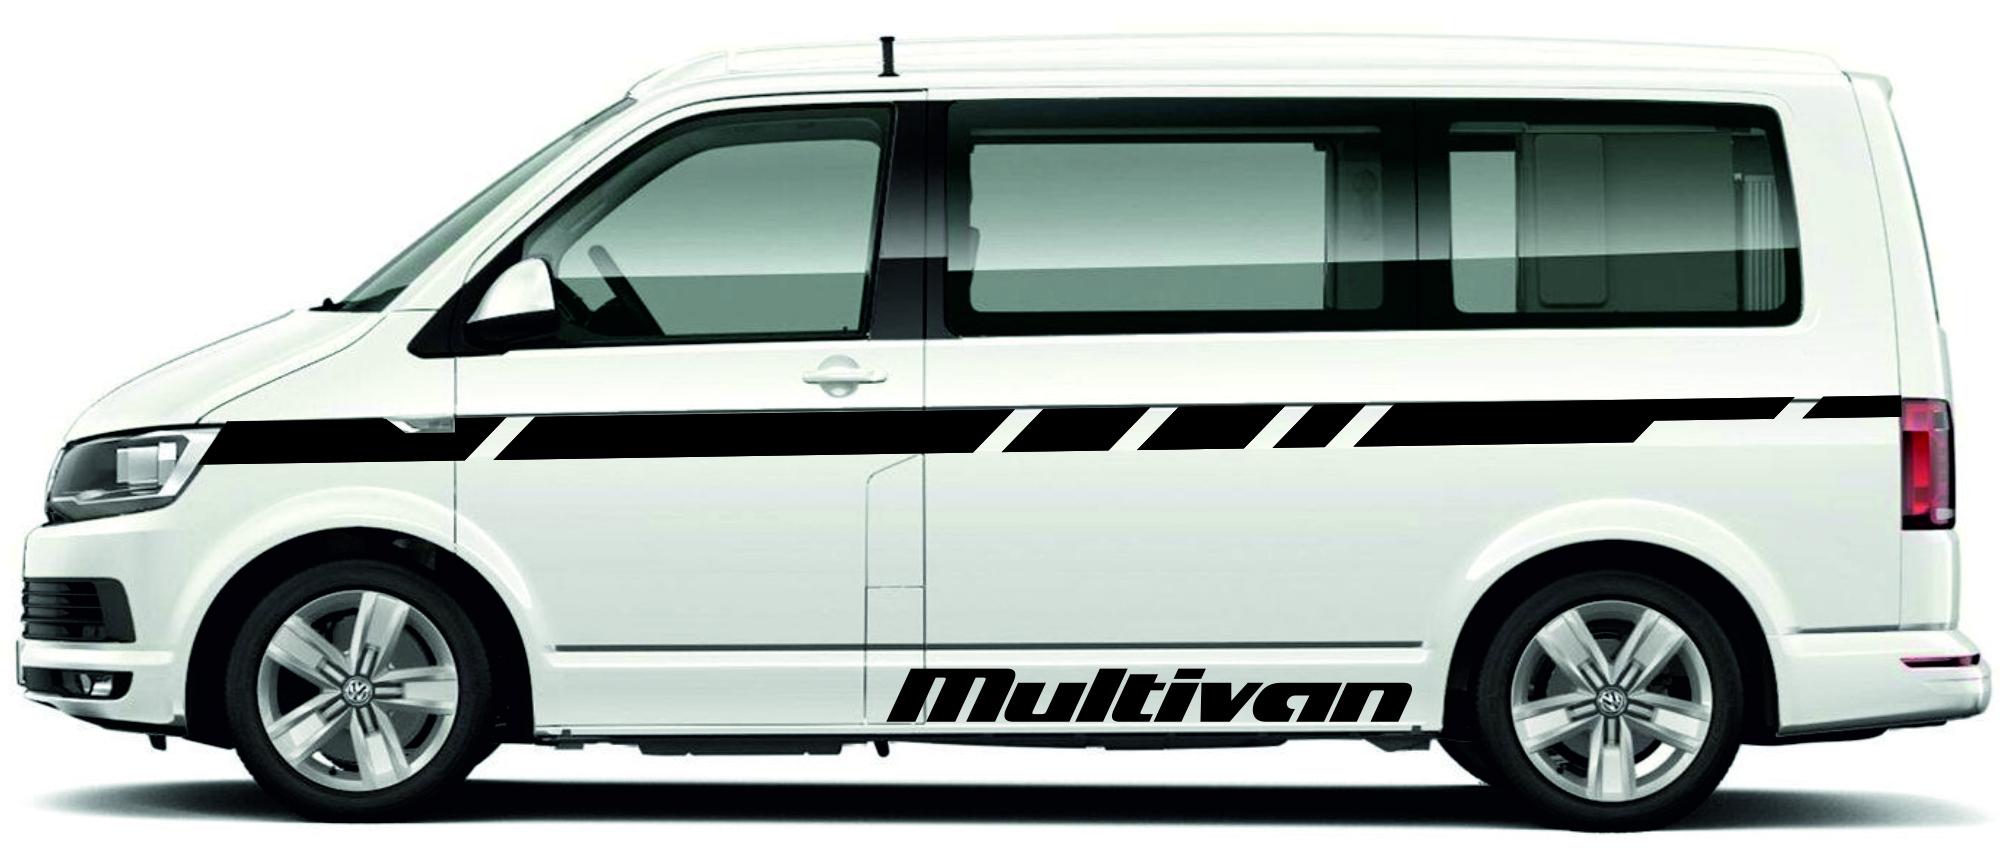 Naklejki VW T5 T6 Transporter Multivan tuning naklejki decals stripes sticker aufkleber nalepky samolepky tuning